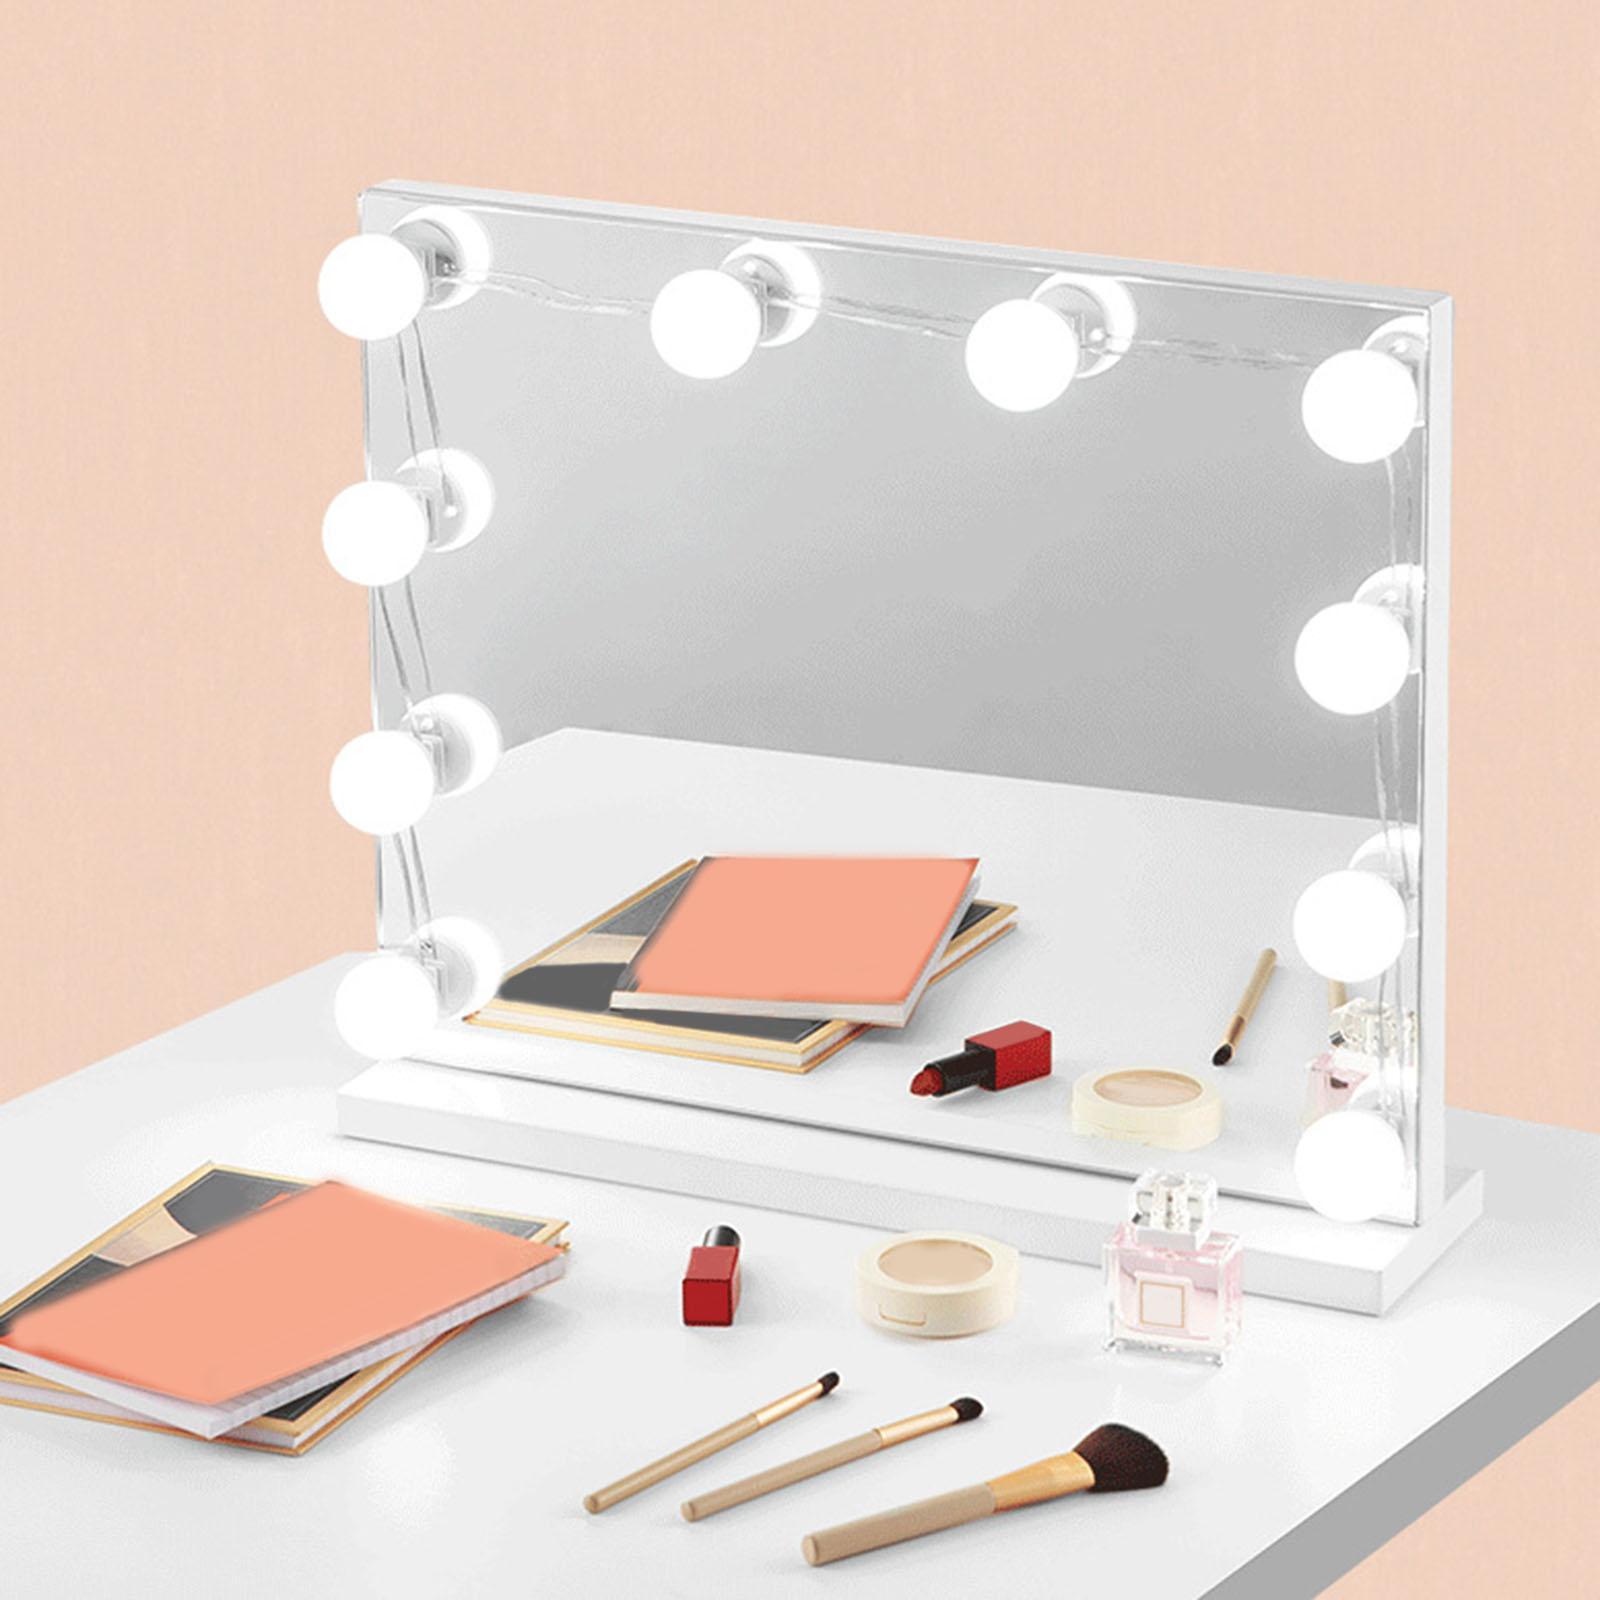 LED Makeup Mirror Lights Vanity Stick Bathroom Mirror Decoration